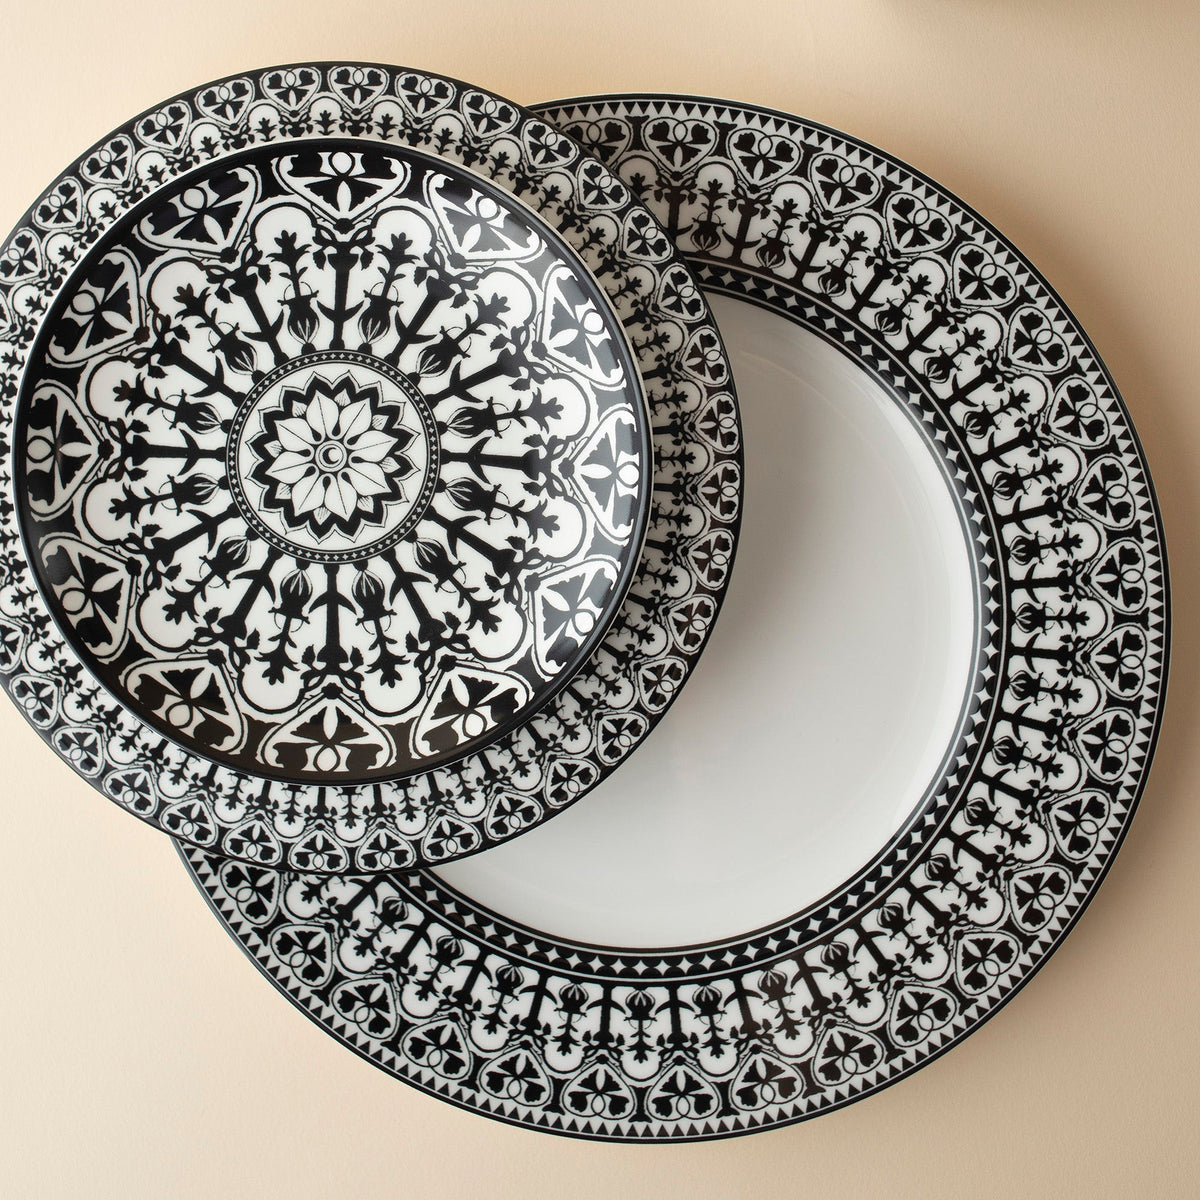 An ornate black and white dinnerware plate resembling a Casablanca design pattern, the Casablanca Salad Plate by Caskata Artisanal Home.